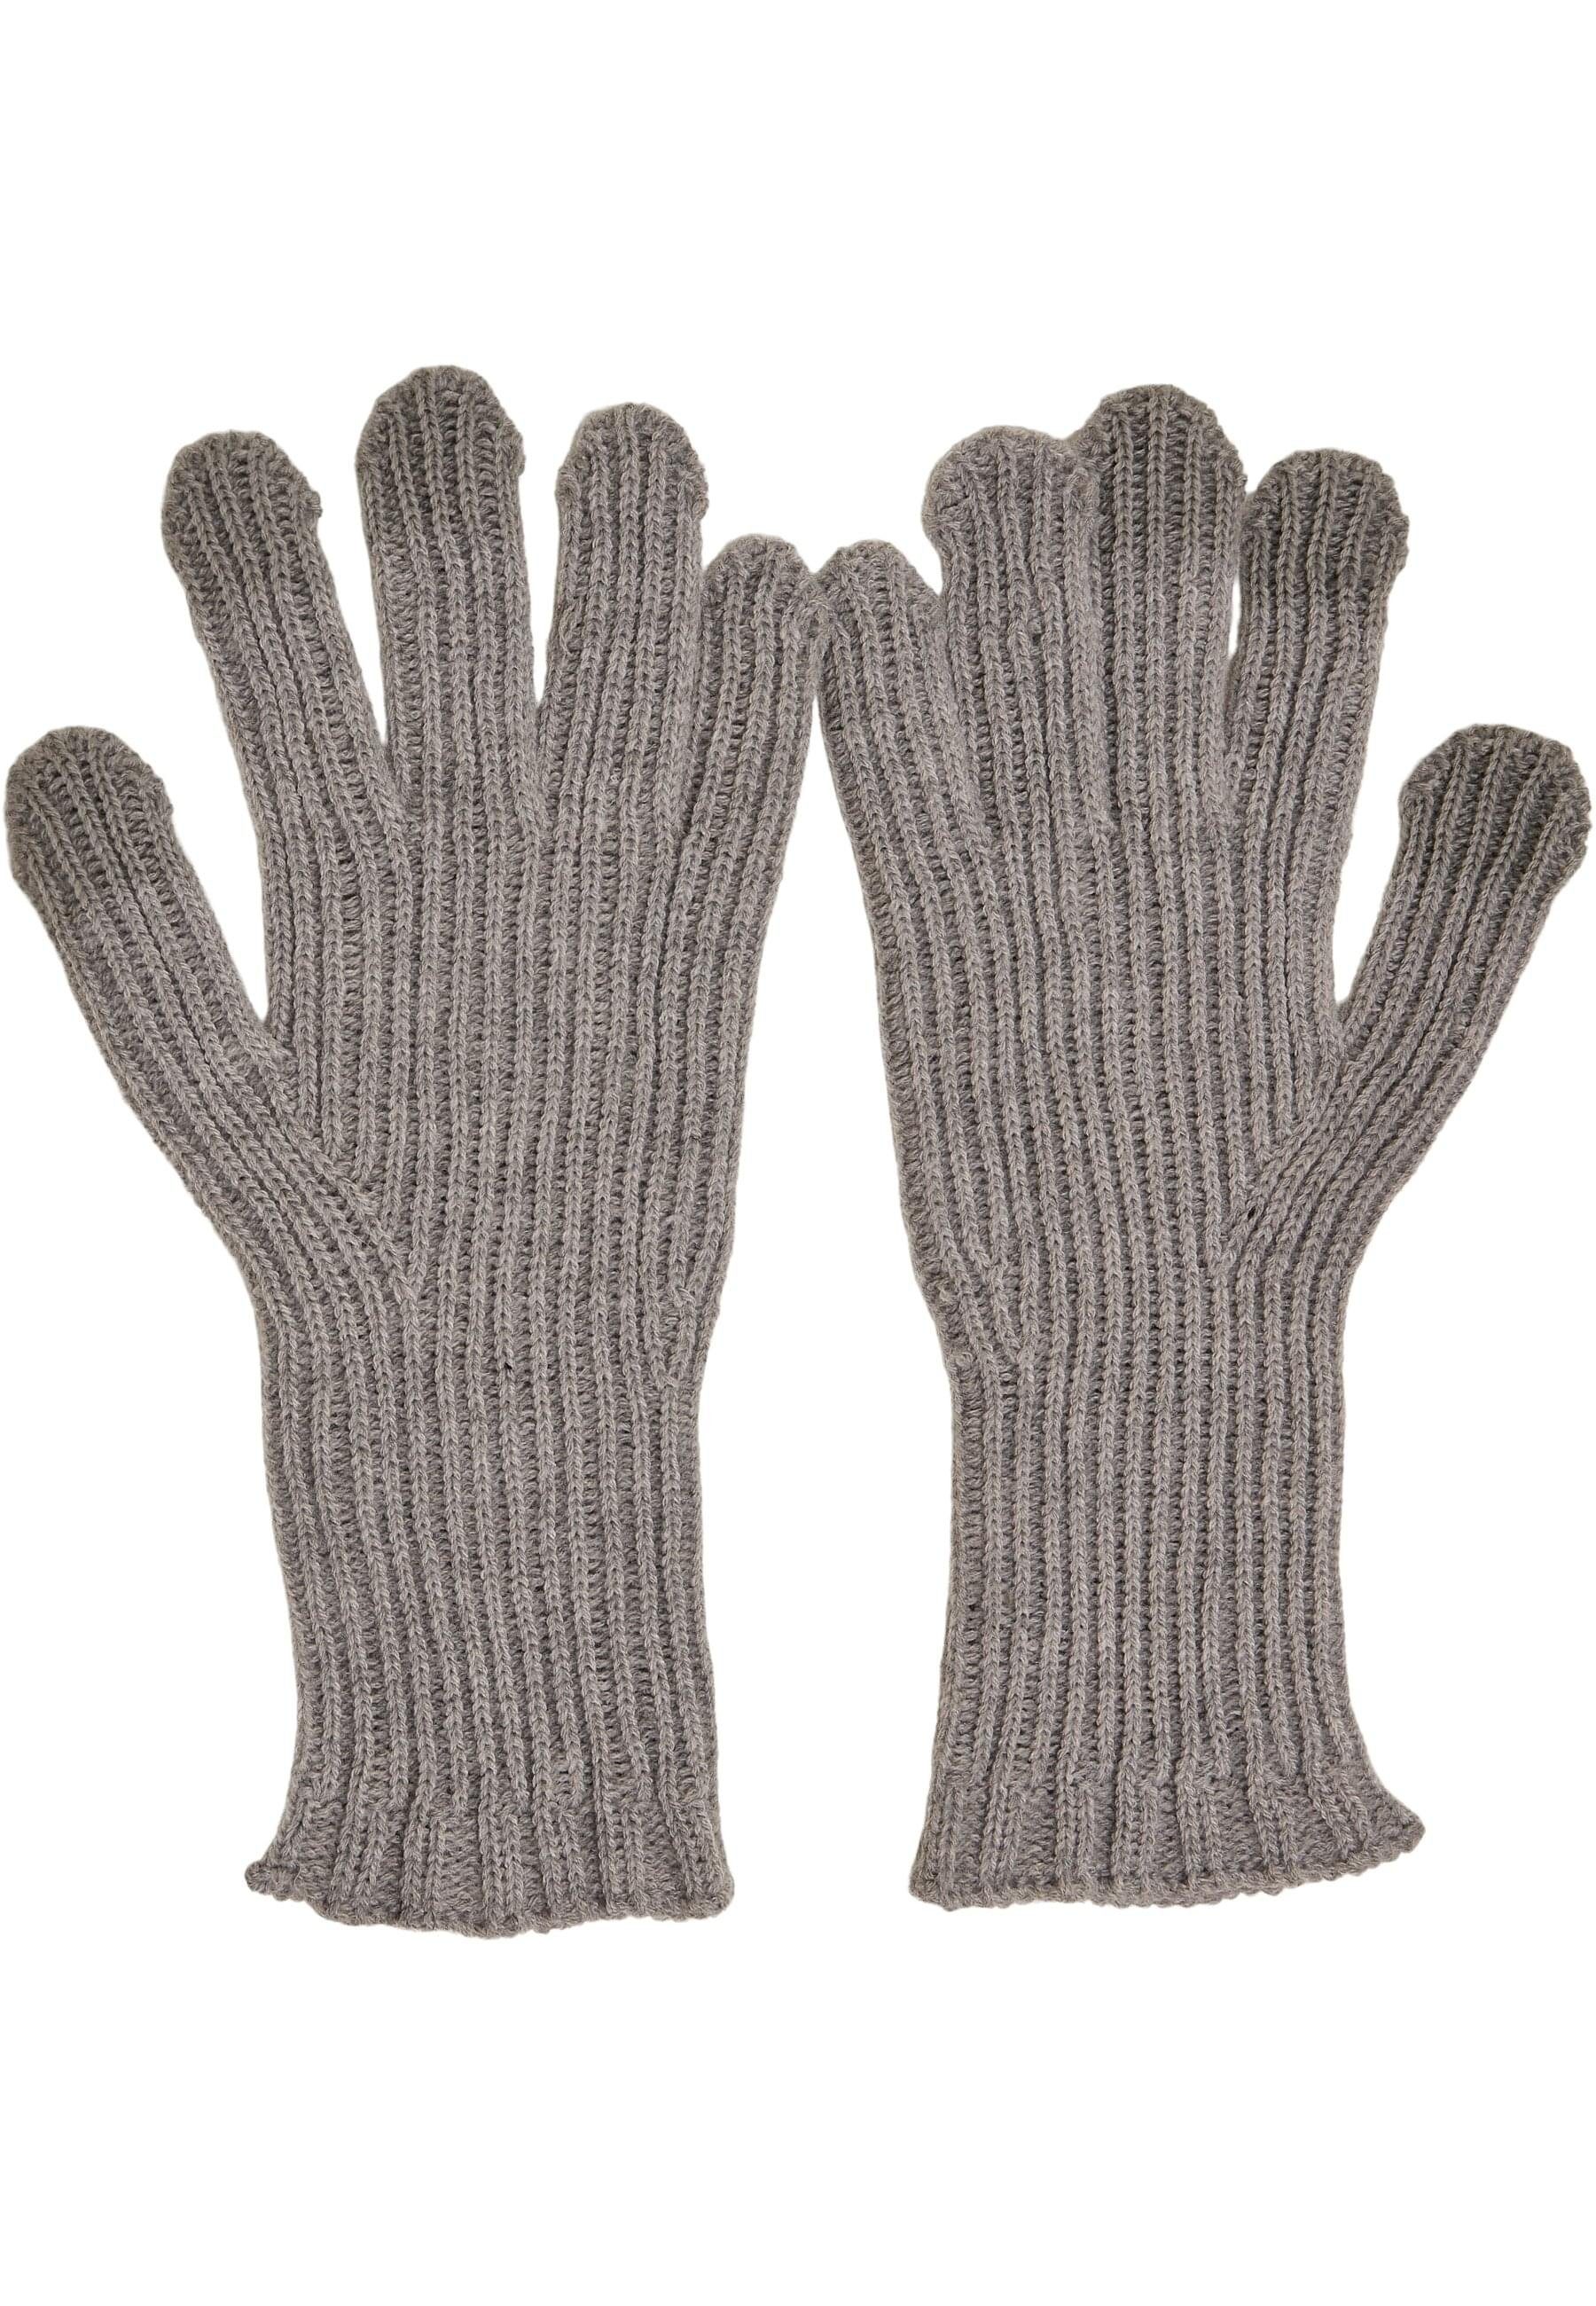 URBAN Smart heathergrey Baumwollhandschuhe Wool Unisex Knitted Gloves CLASSICS Mix